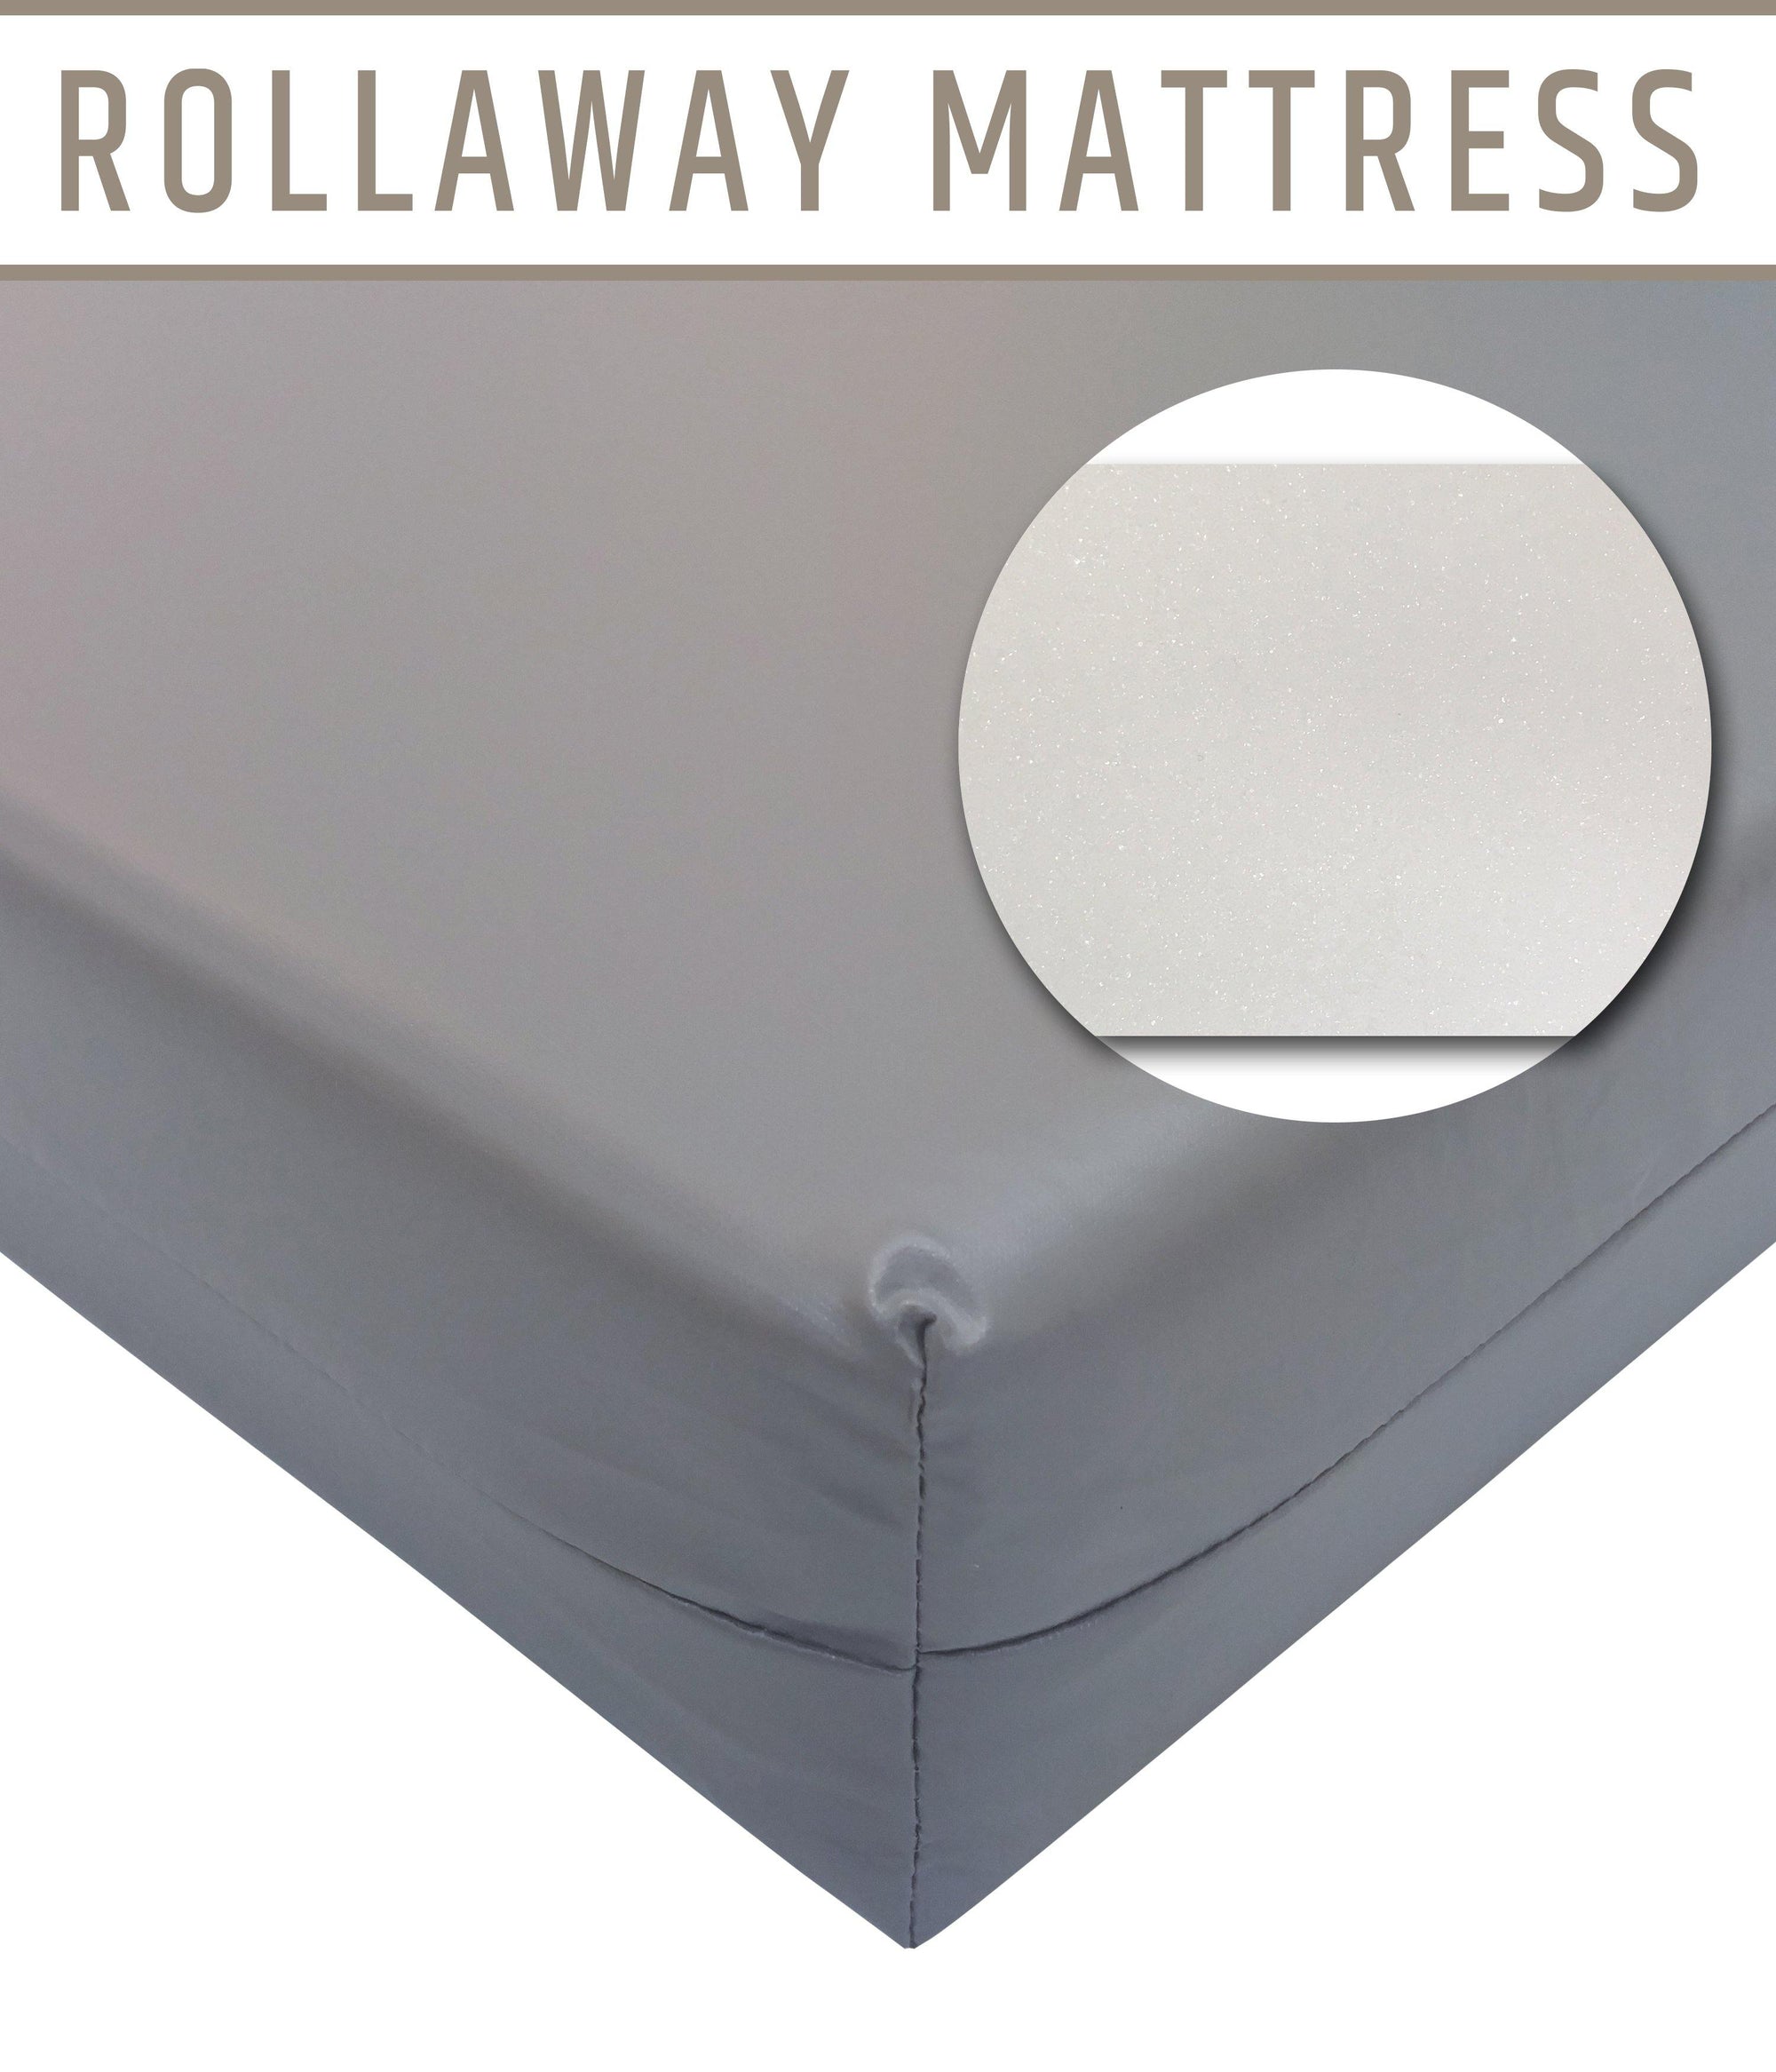 Rollaway Mattress, Hide-A-Bed mattresses and Sleeper Chairs